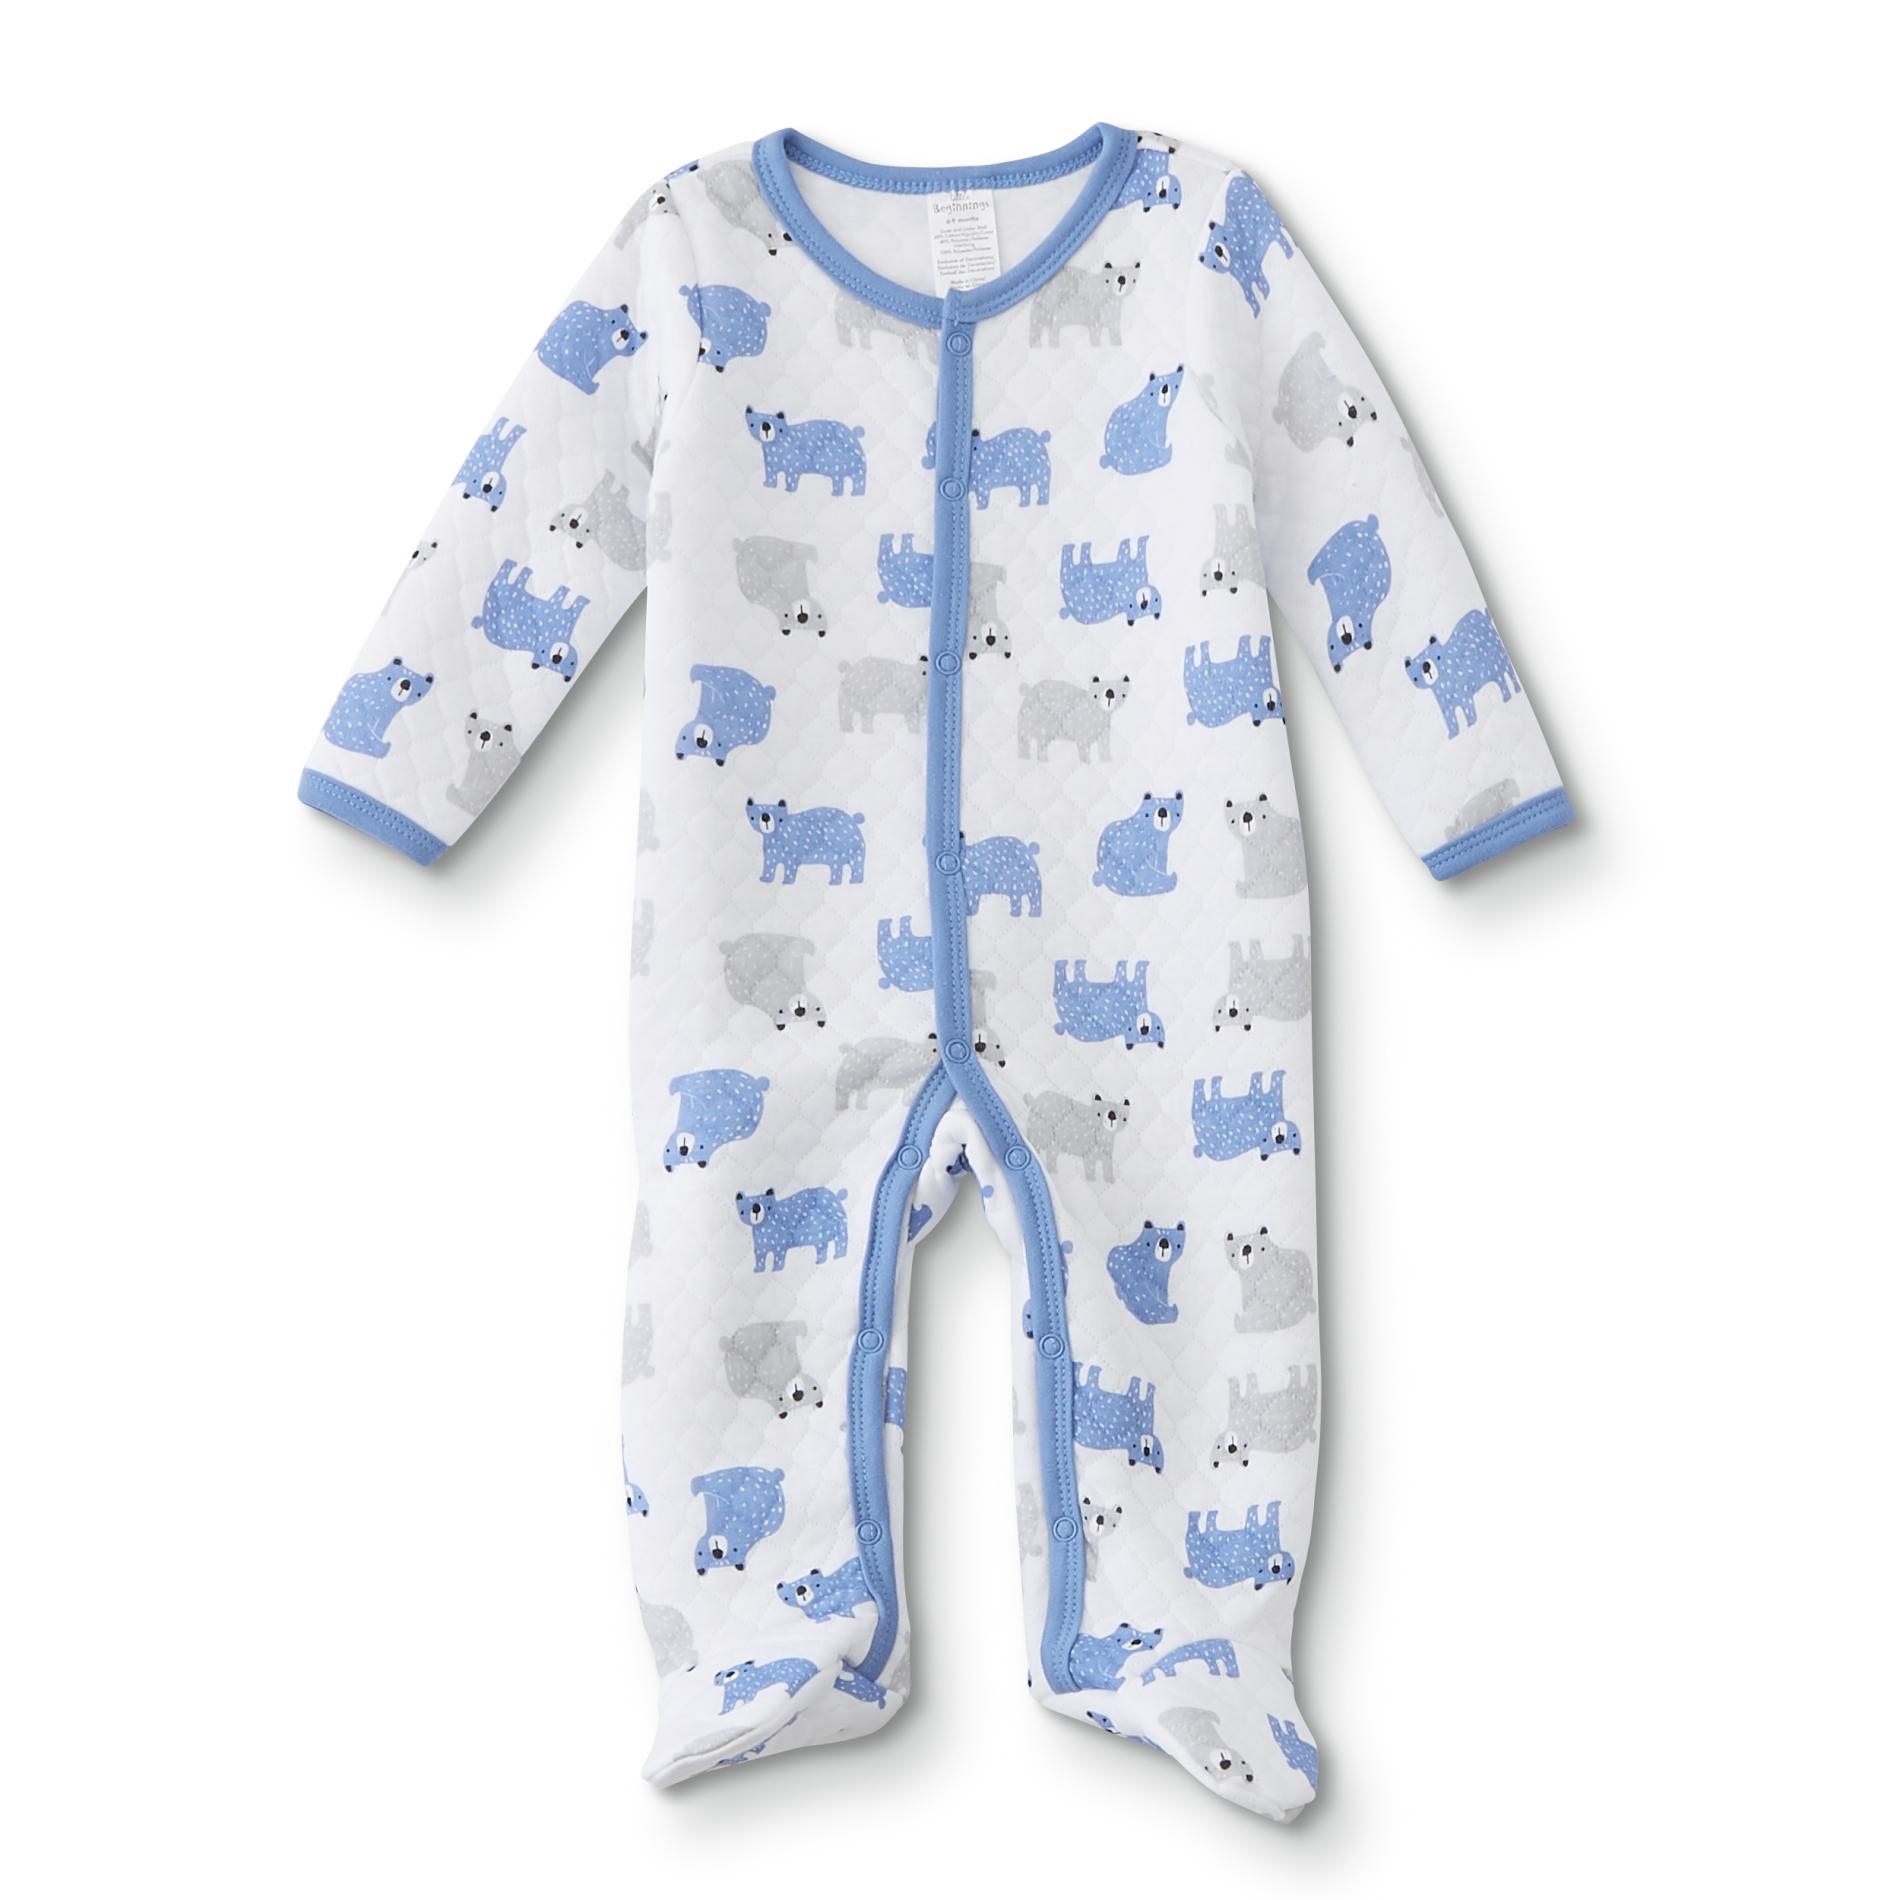 Cudlie Infant Boys' Quilted Sleeper Pajamas - Bears